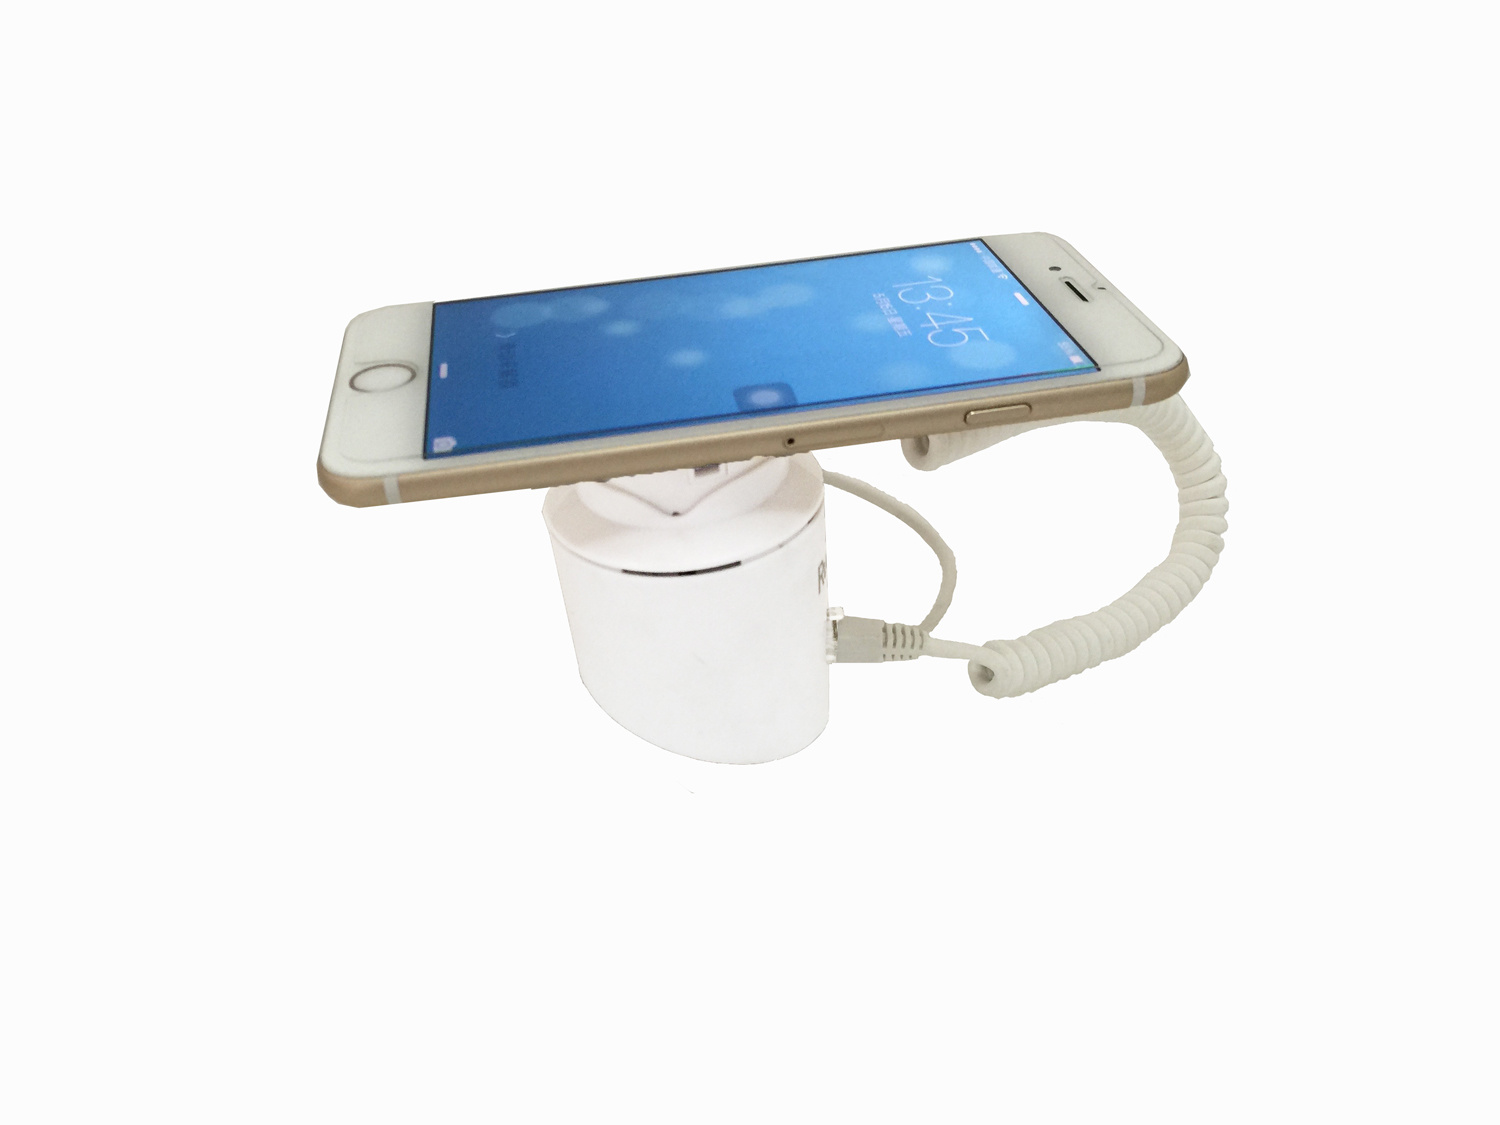 Shoplifting Display Holder for Mobile Phone